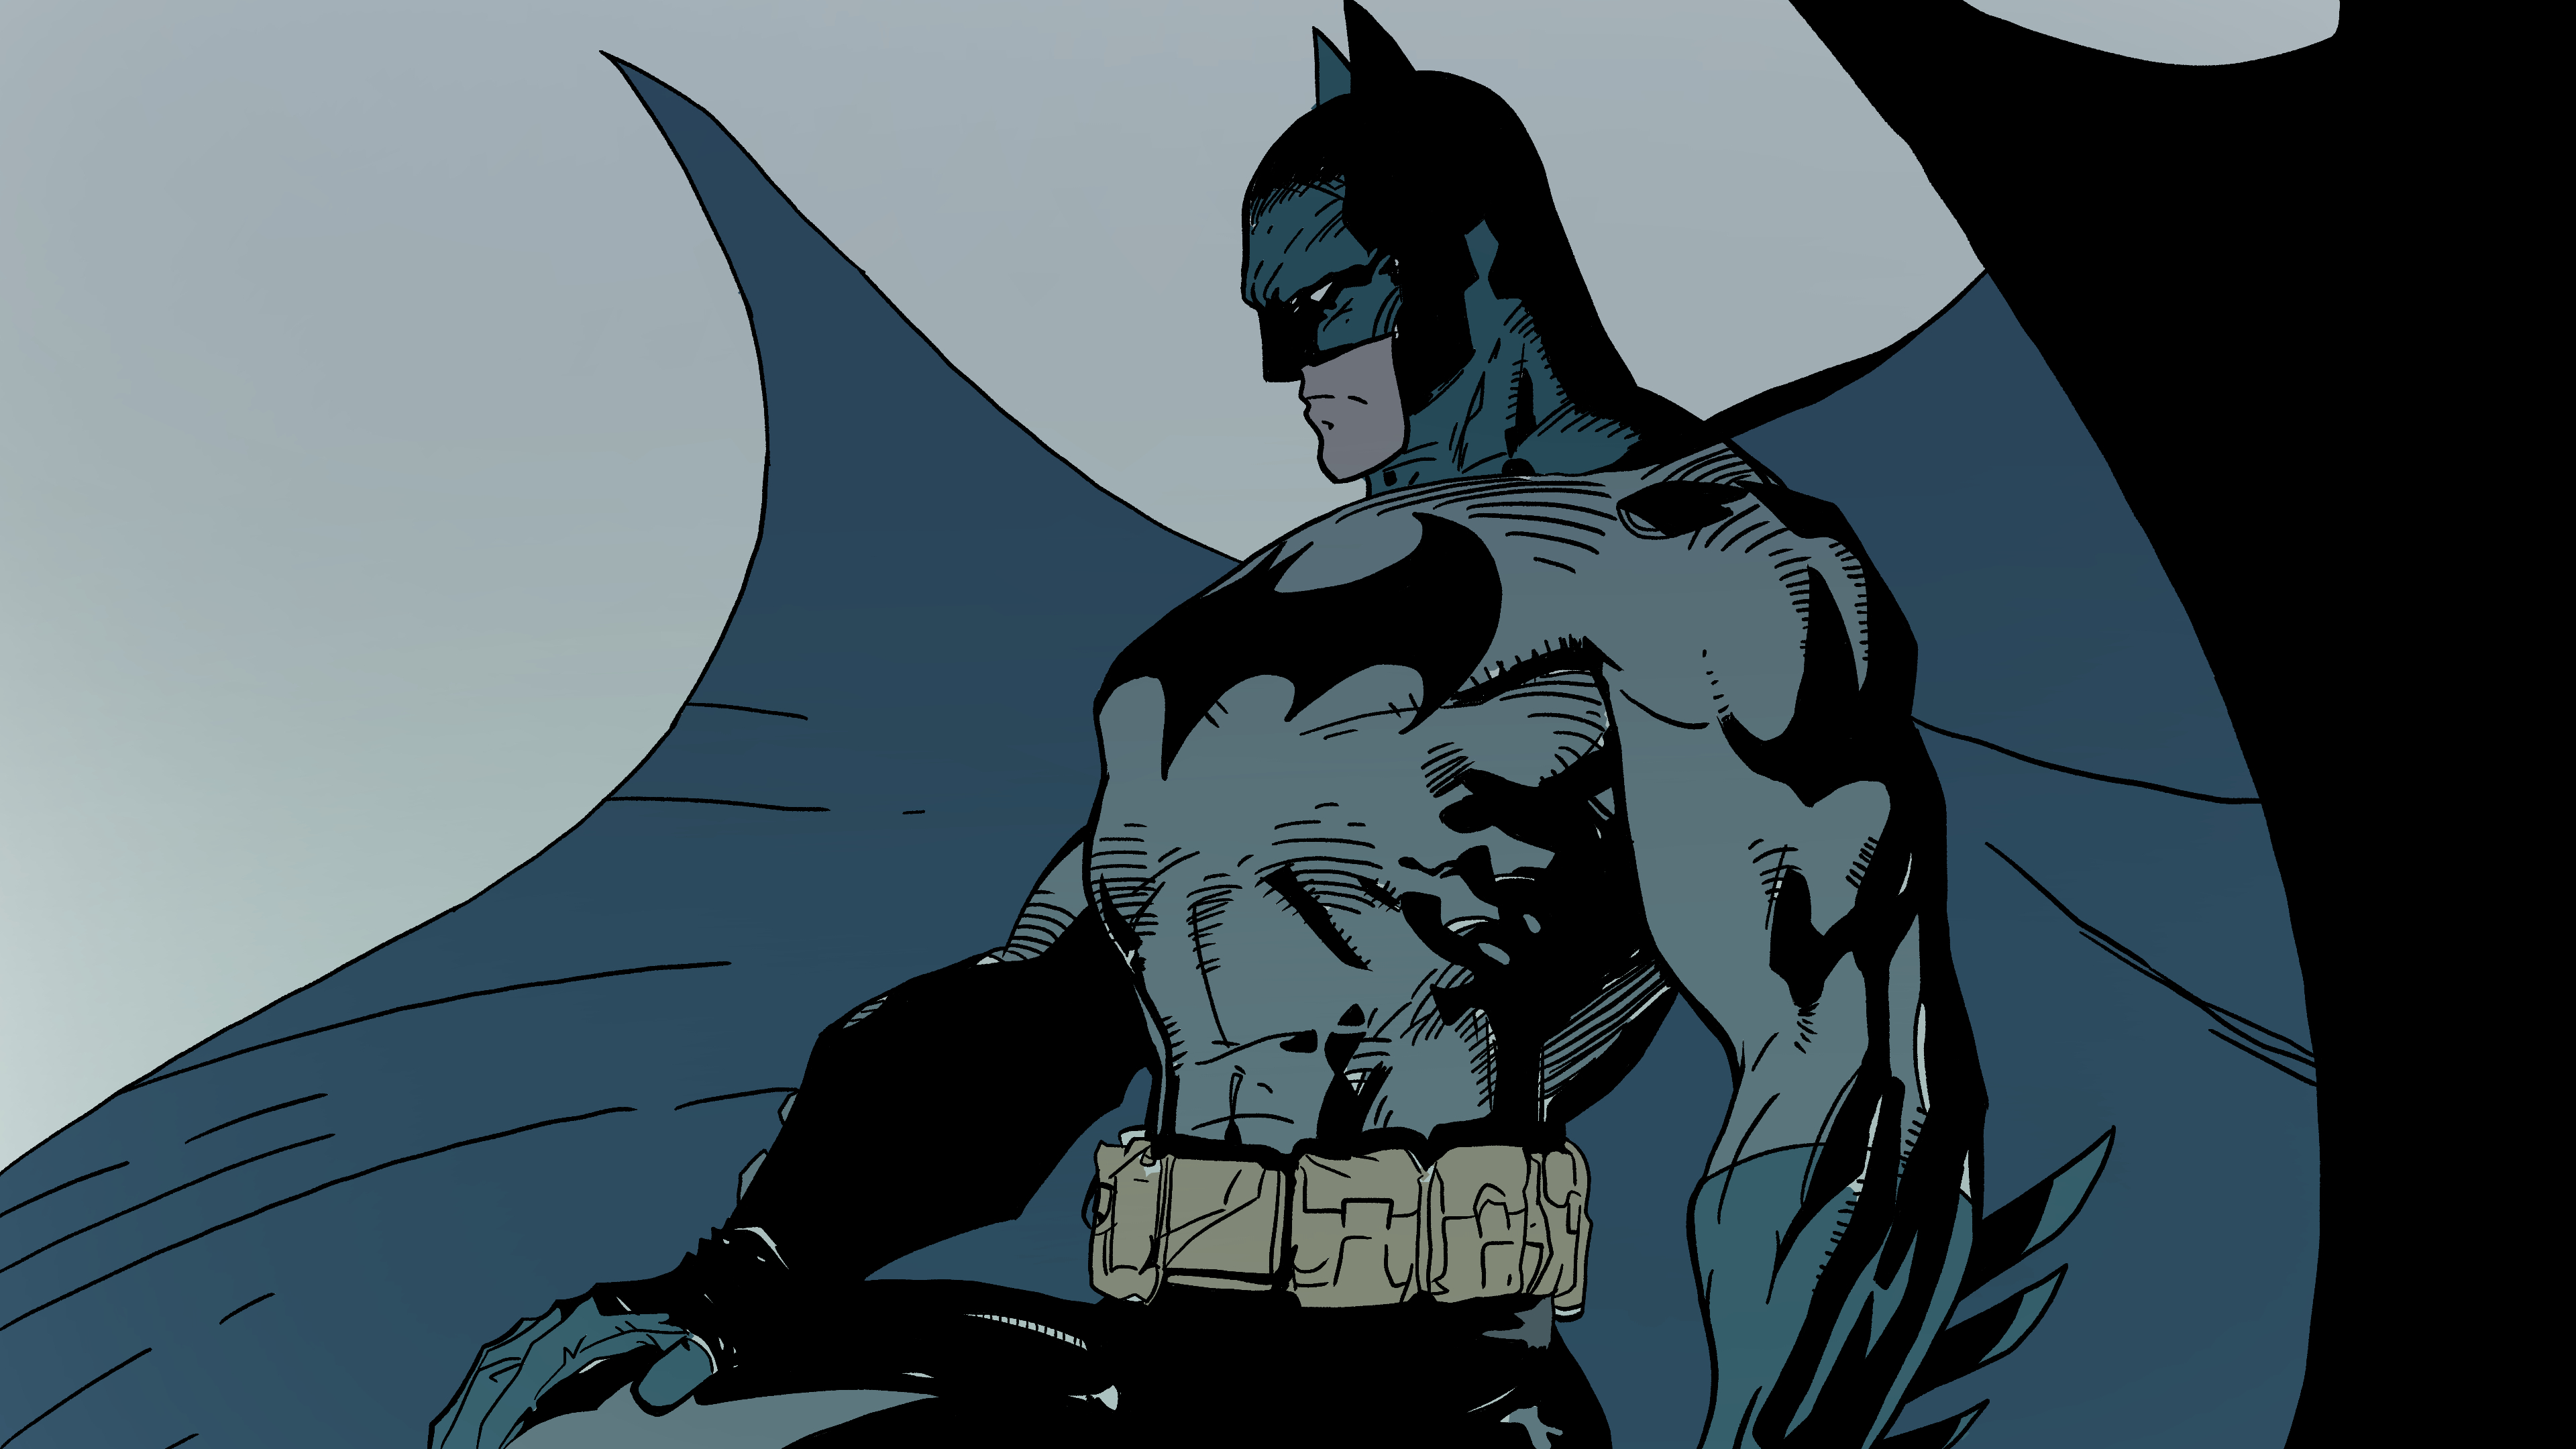 Скачать обои бесплатно Комиксы, Бэтмен, Комиксы Dc картинка на рабочий стол ПК